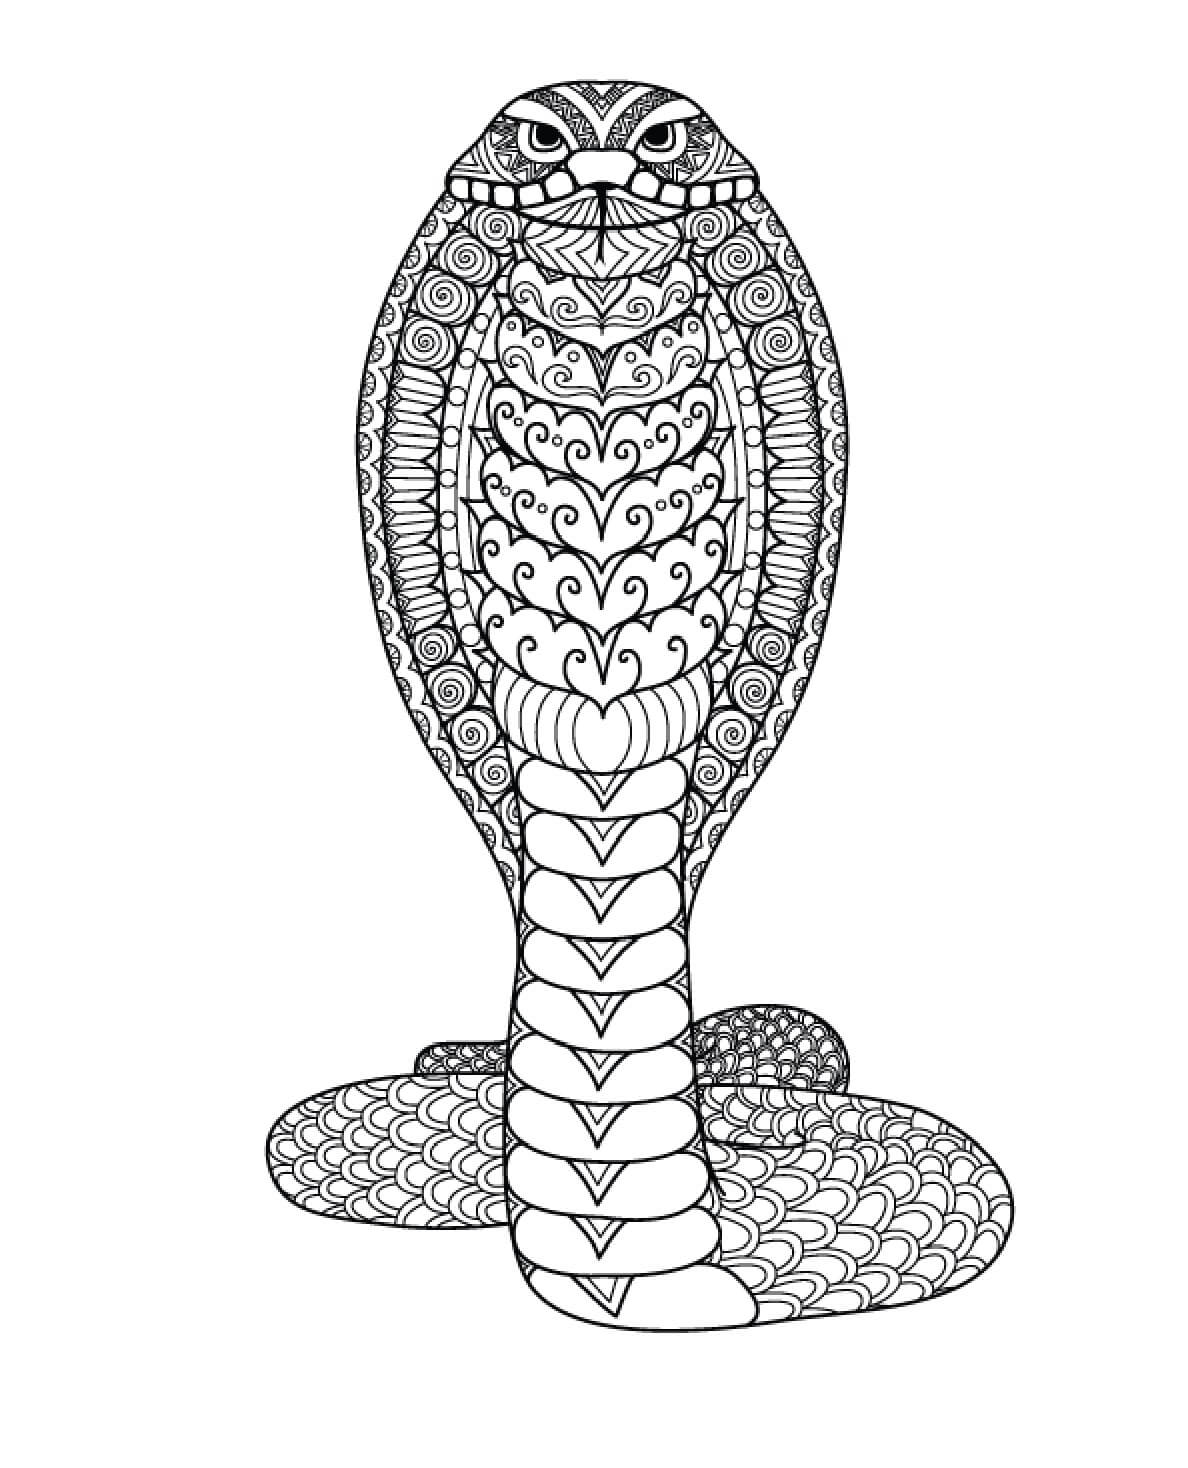 Mandala Cool Snake Coloring Page Mandalas